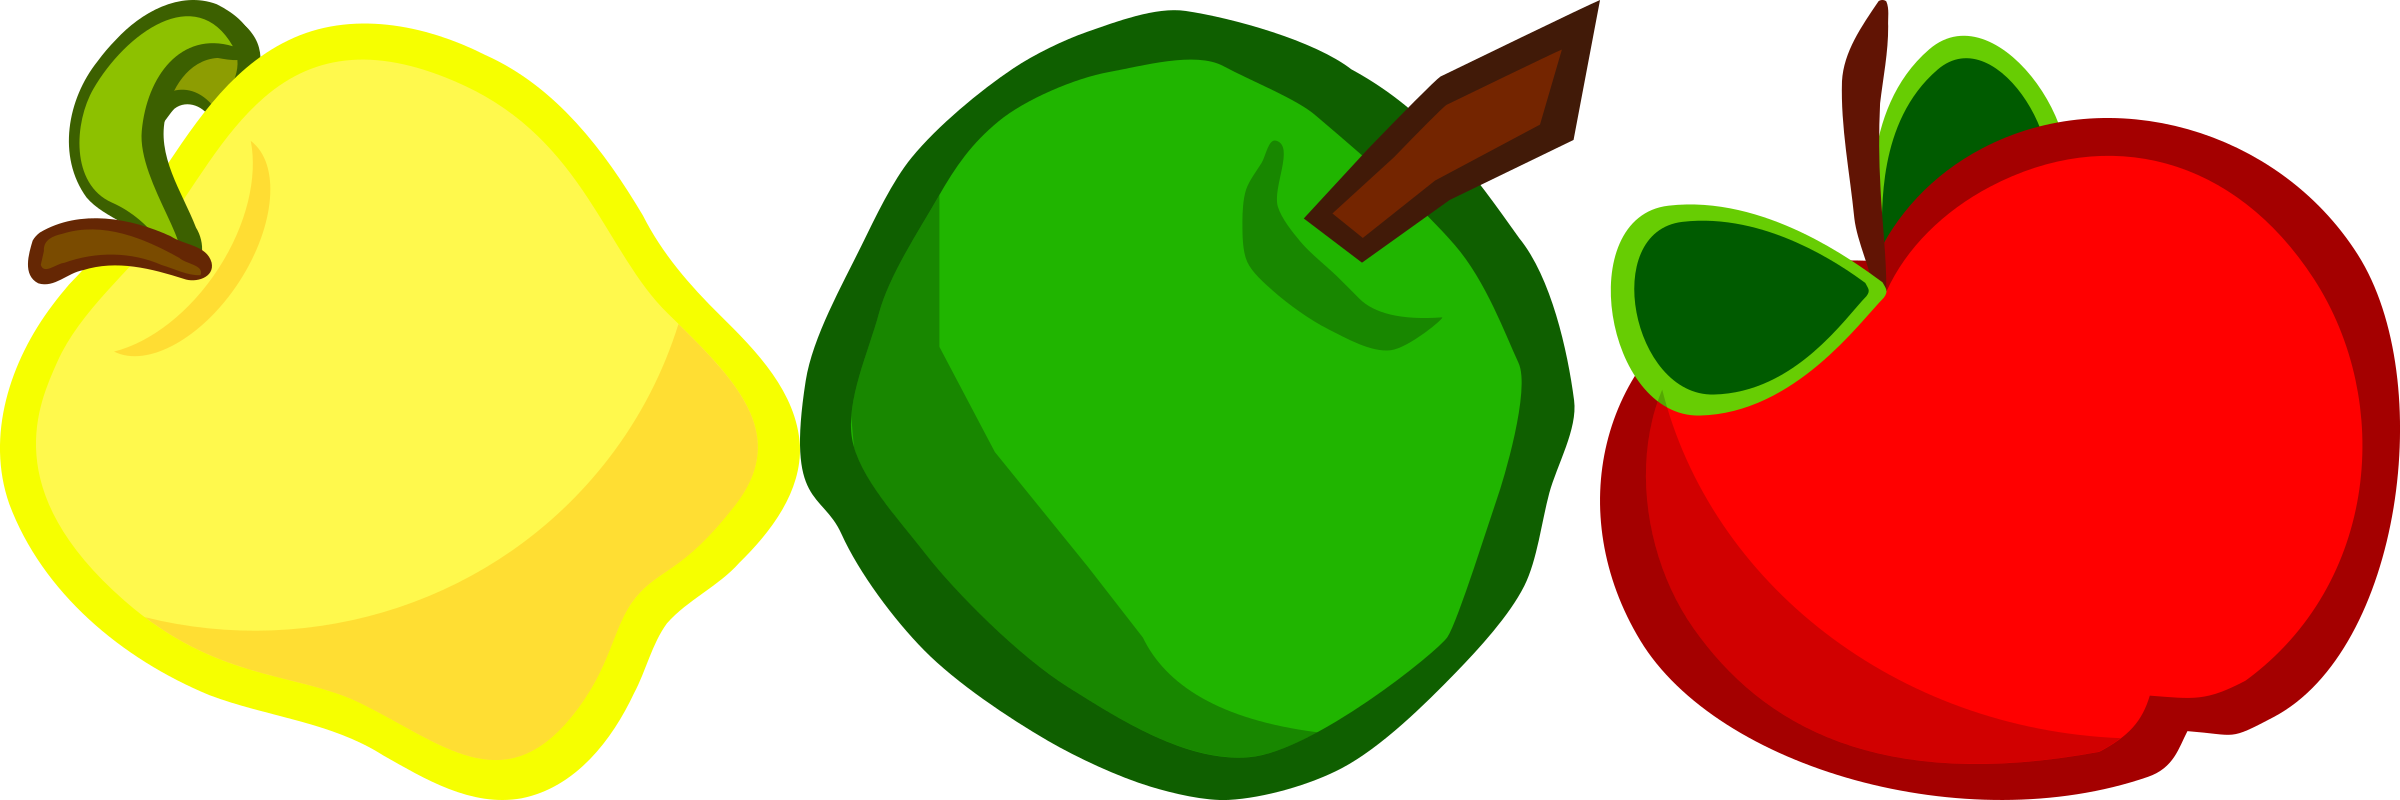 clipart apple banner